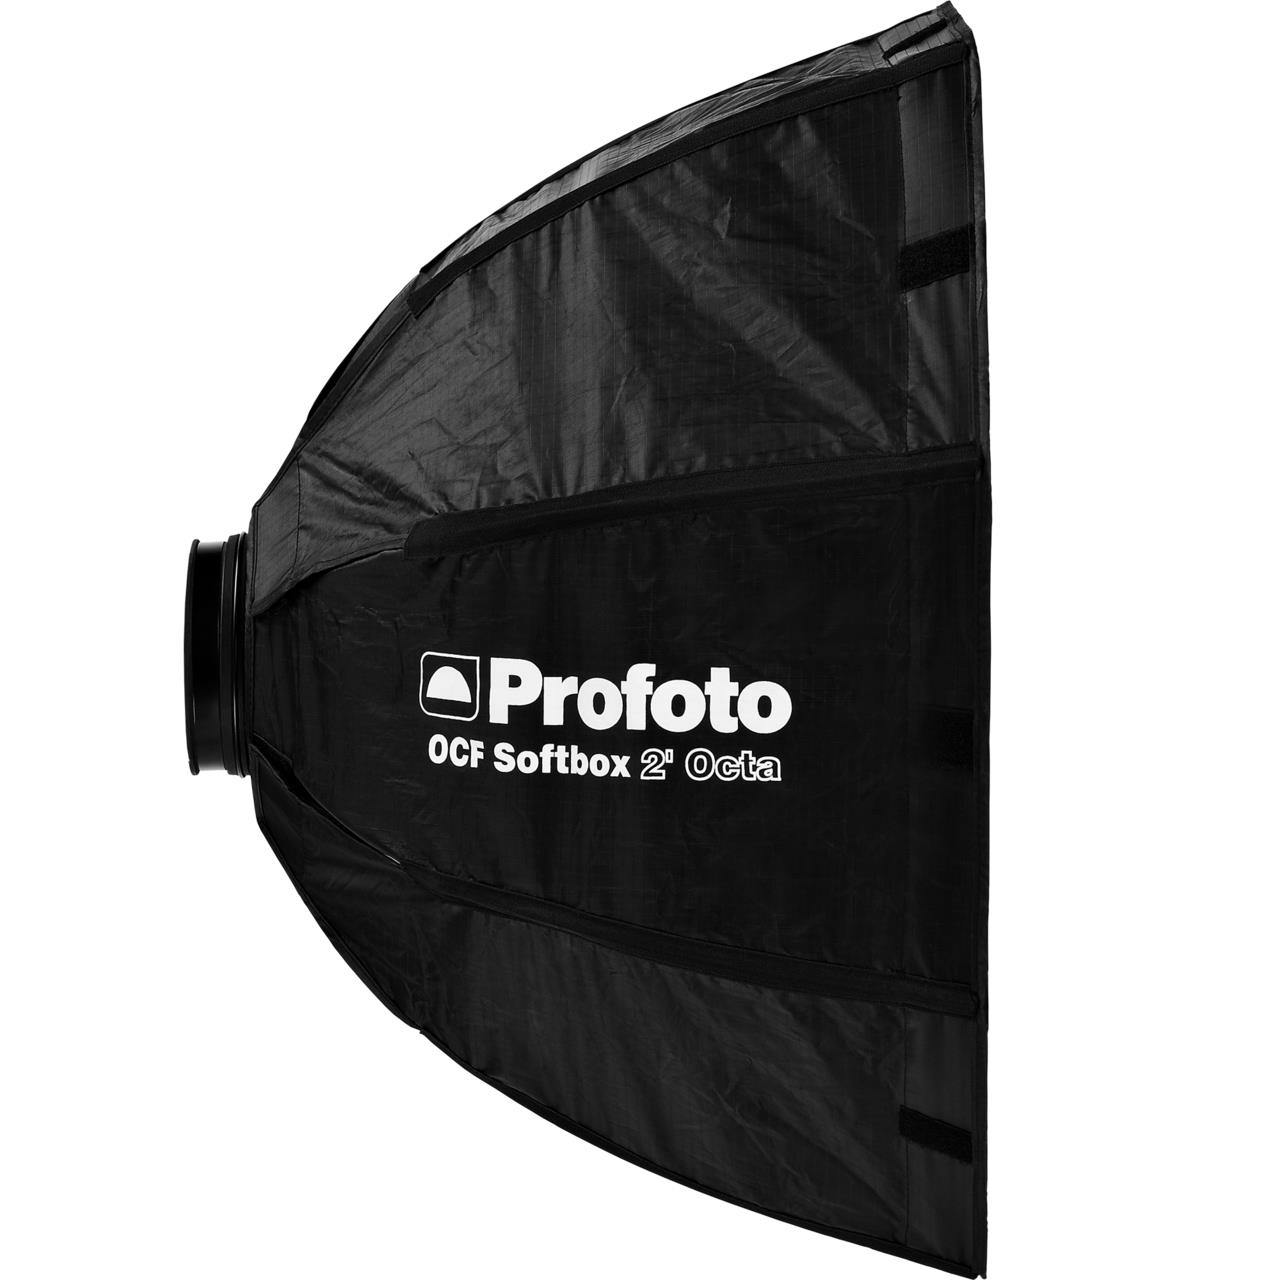 Buy Profoto OCF Softbox Octa online | Profoto (US)